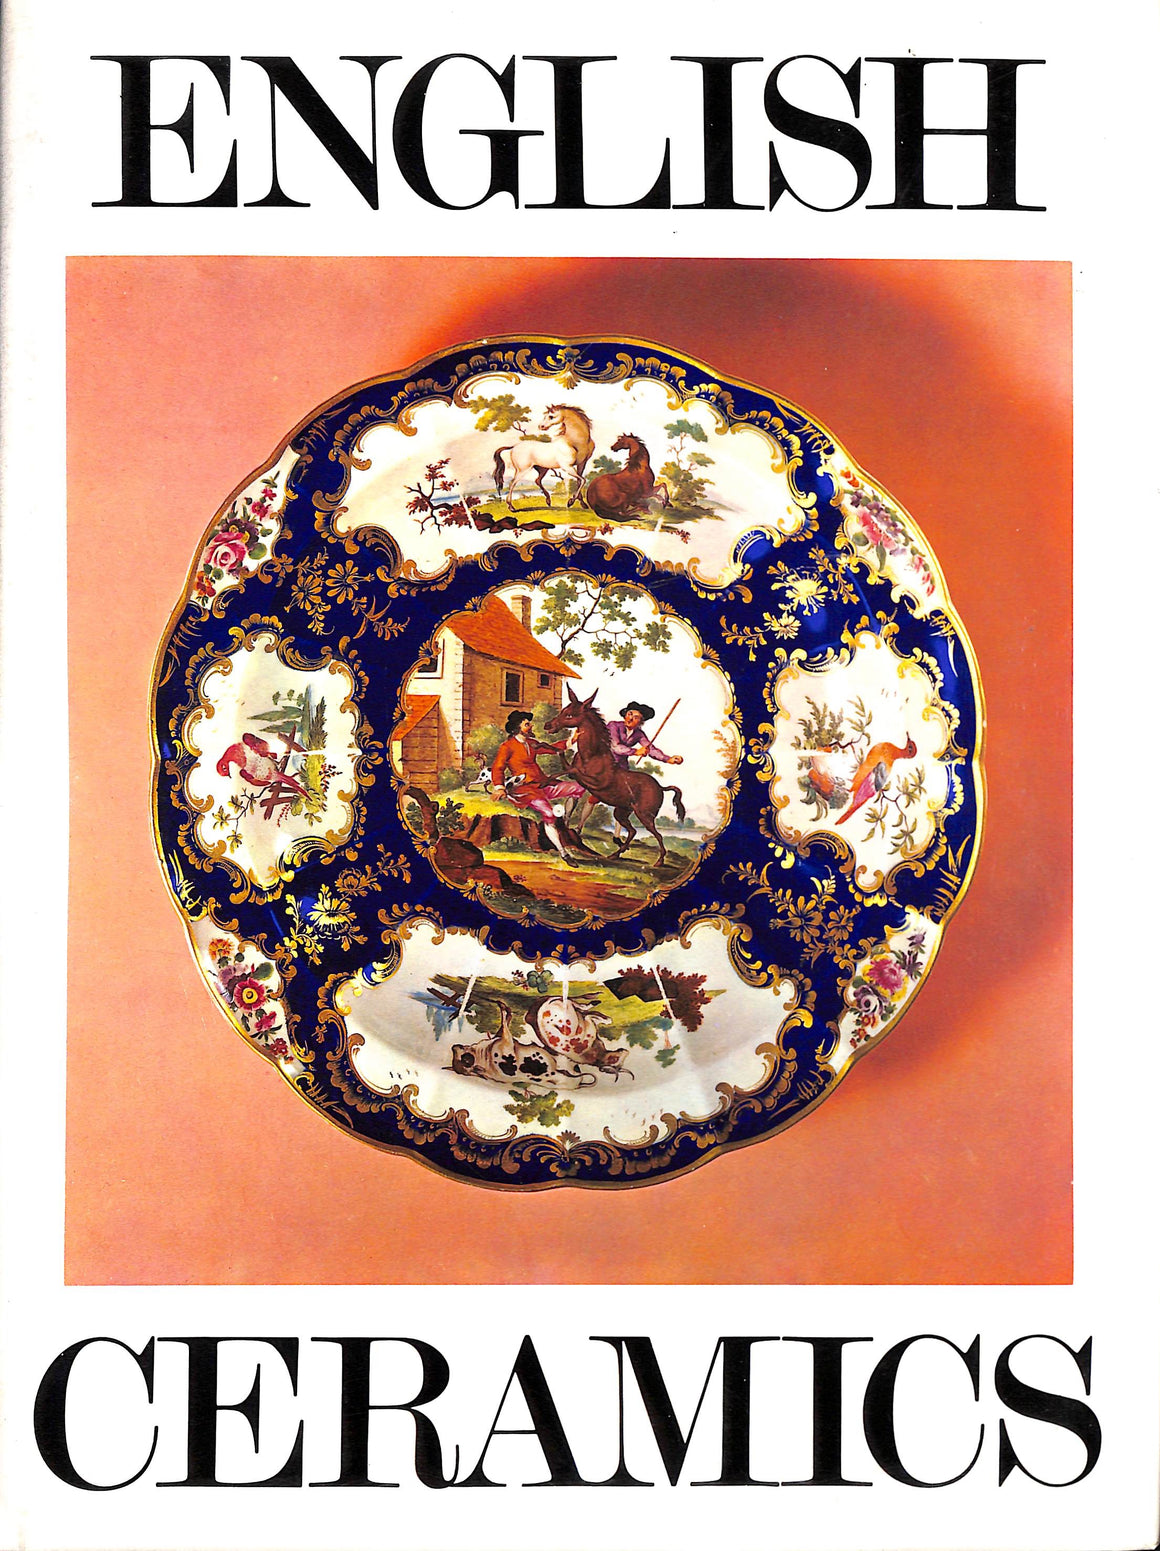 "English Ceramics" 1961 SAVAGE, George